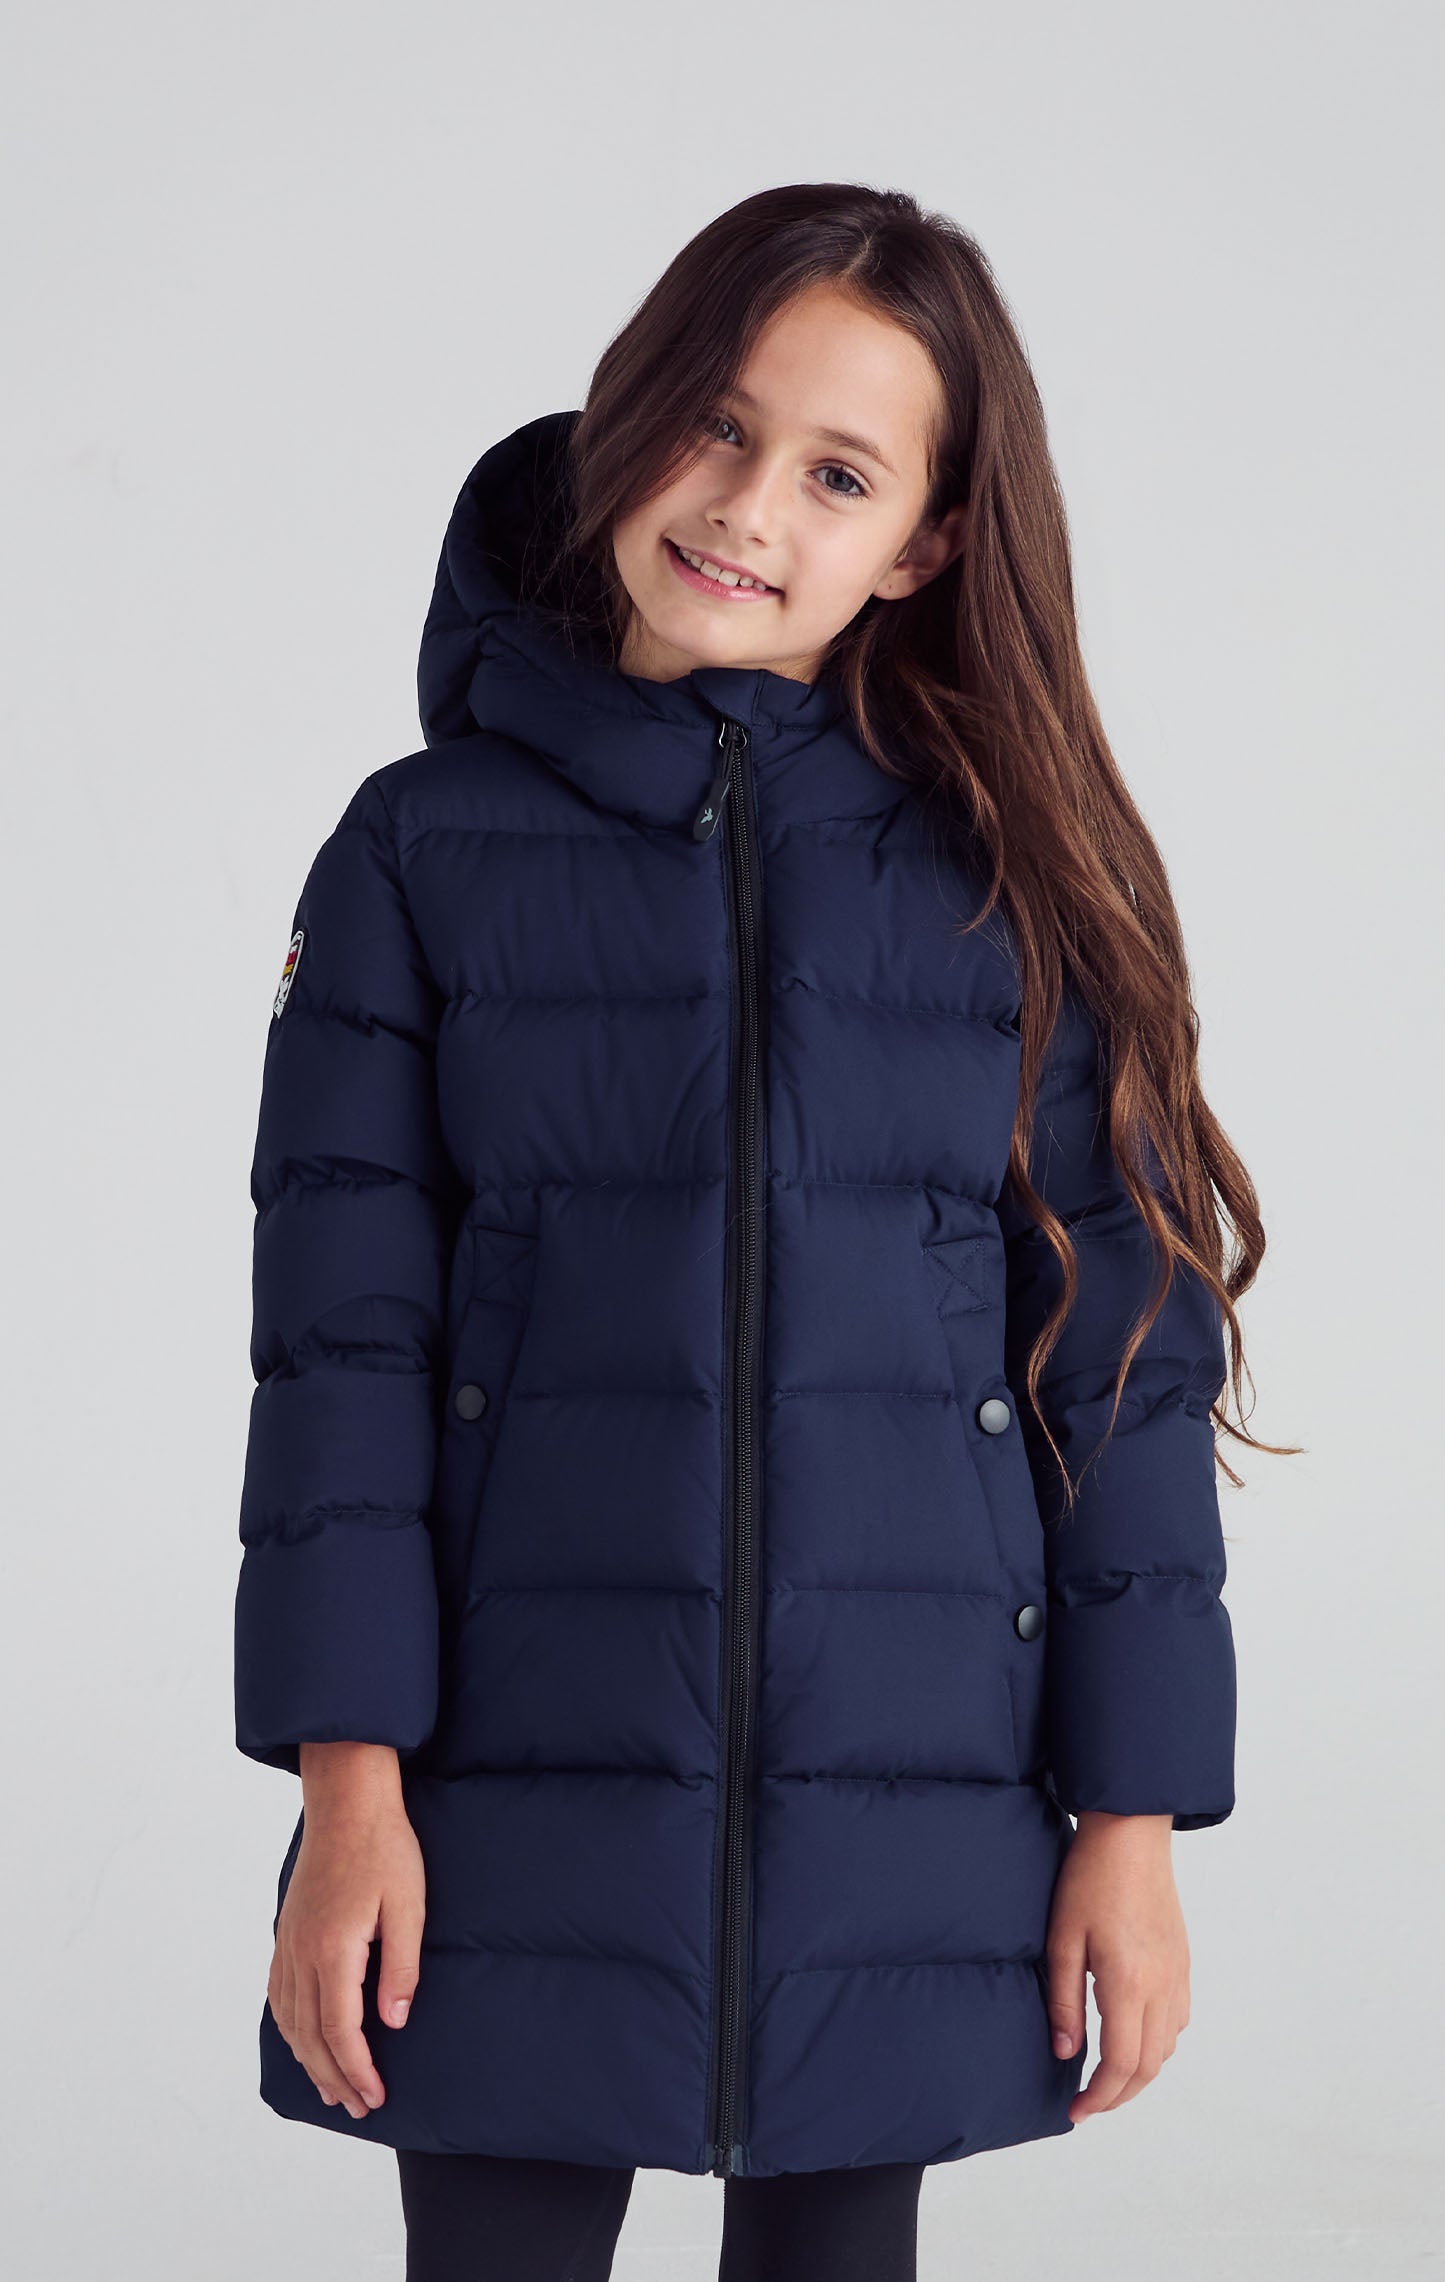 Girls' Coats & Jackets | Denim Jackets, School & Rain Coats | Primark